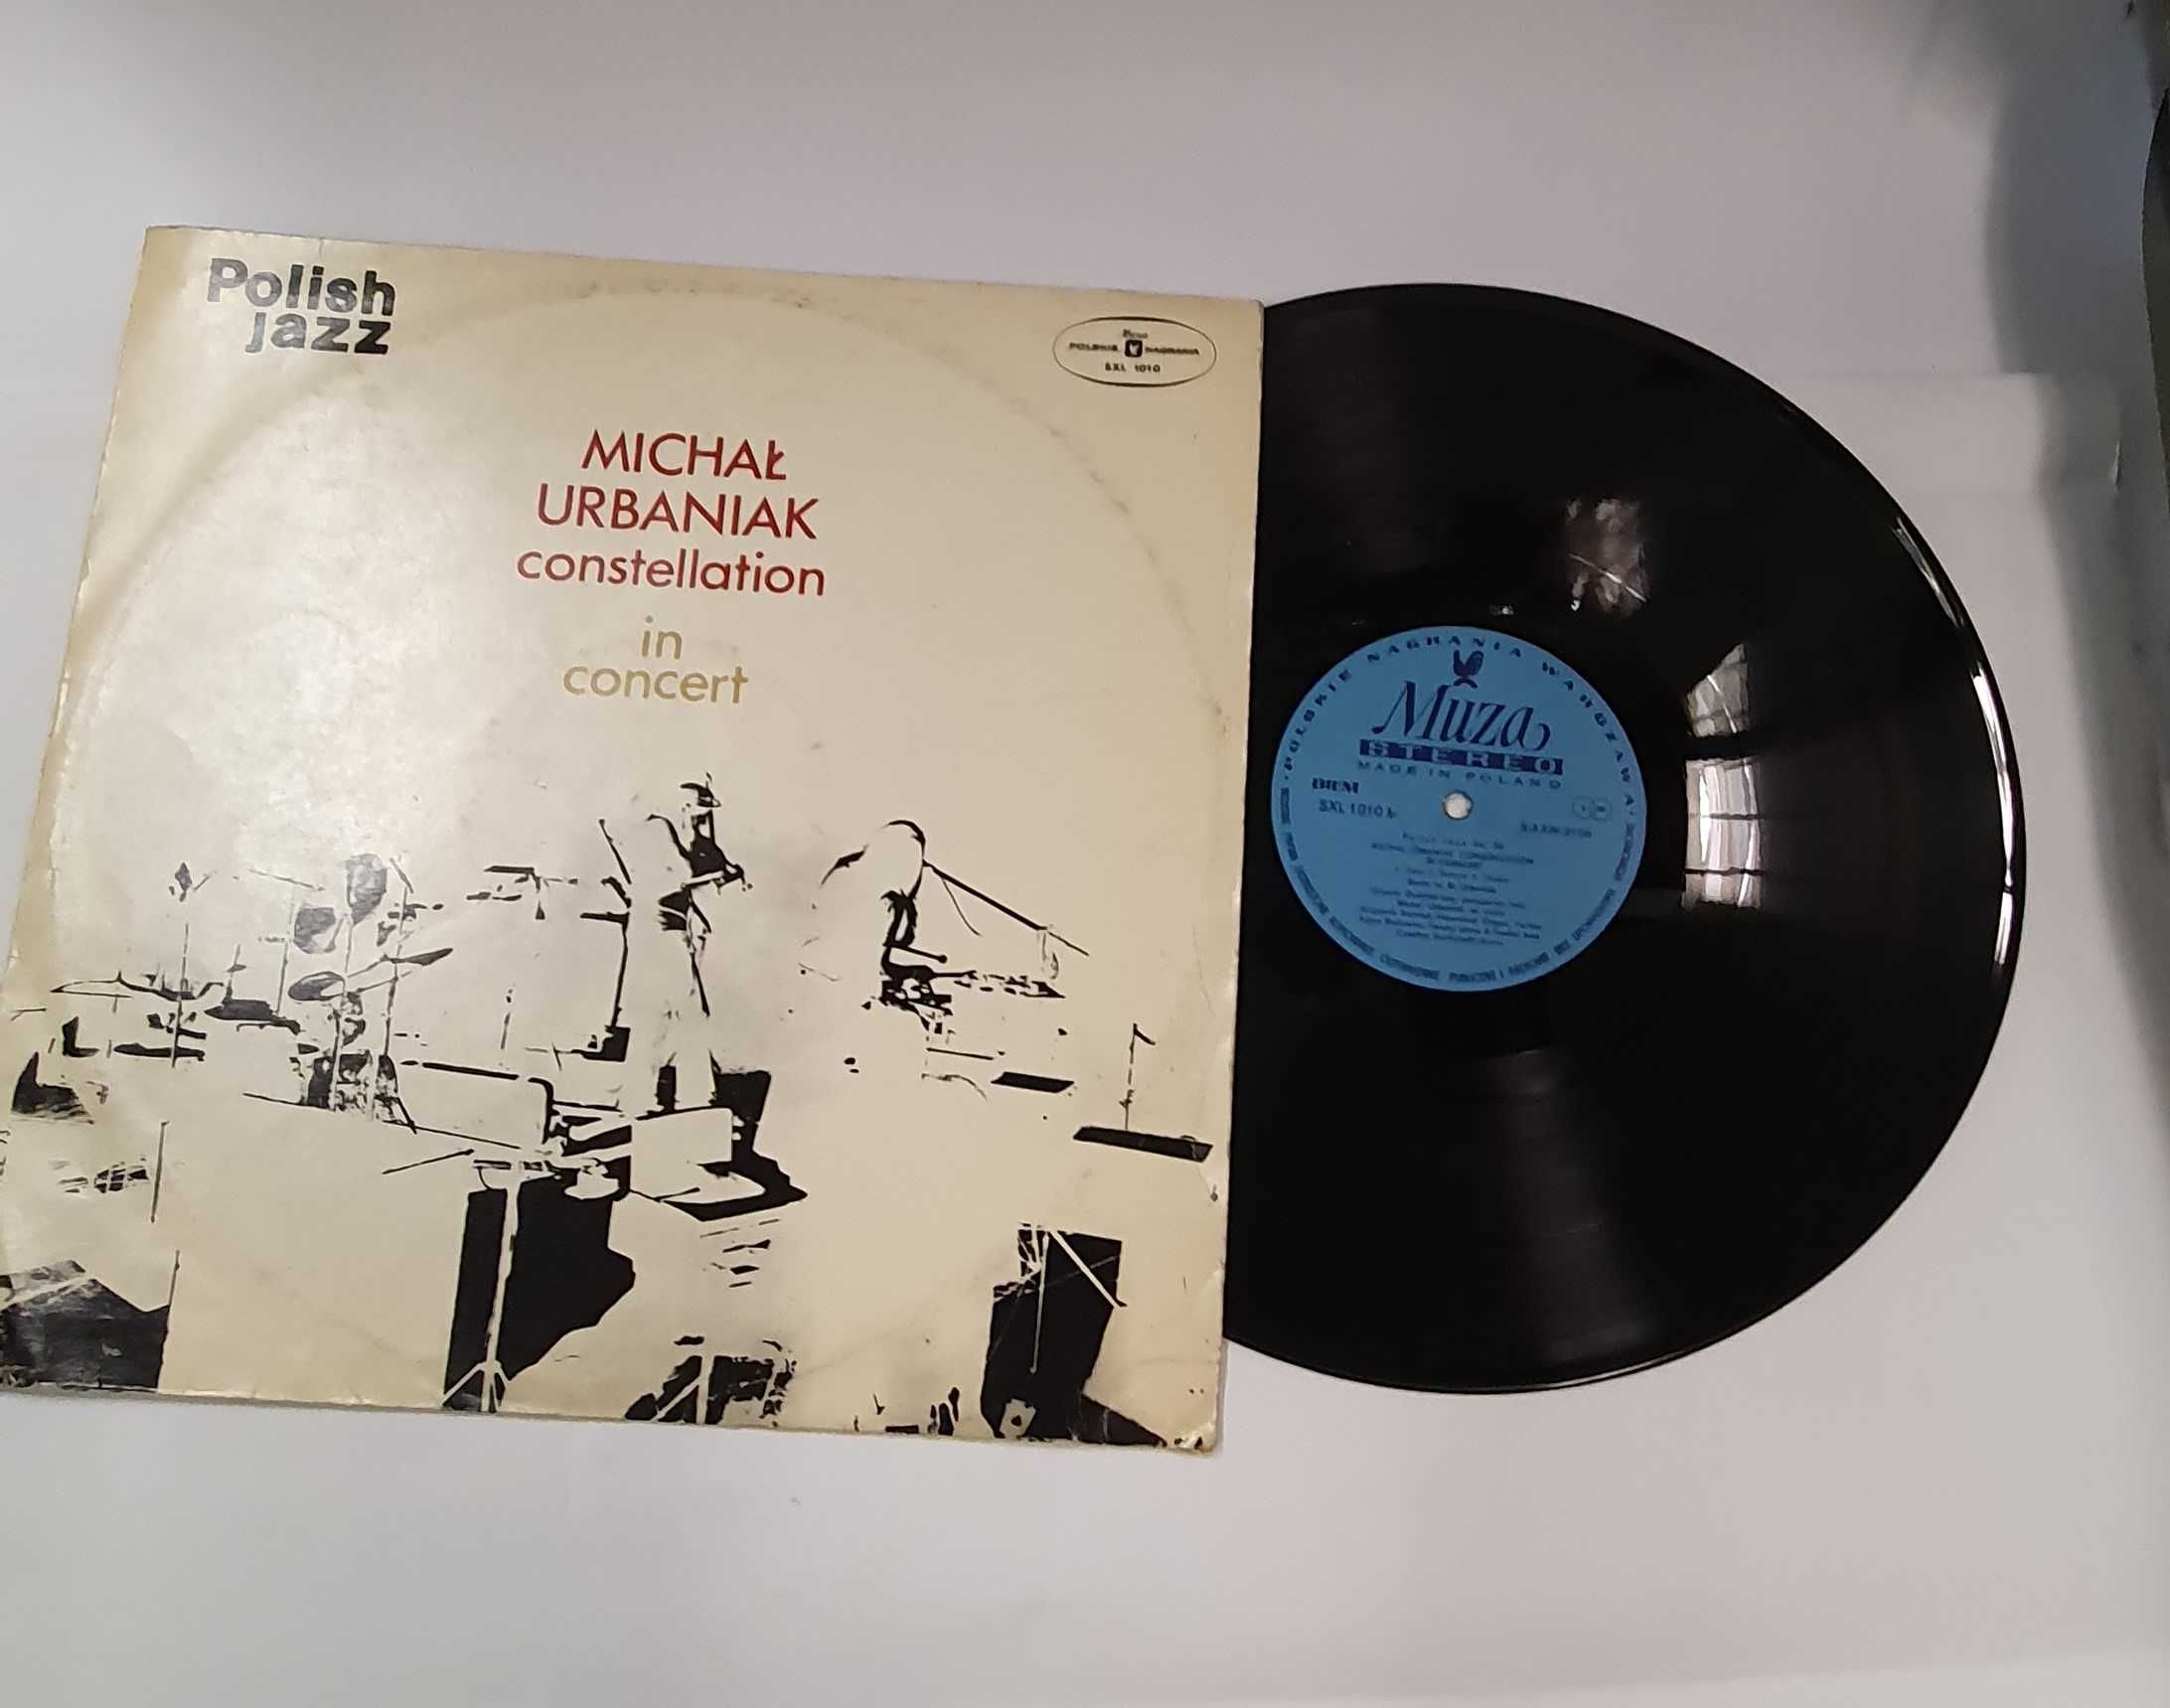 EX Michał Urbaniak Constellation In Concert 1973  Polish Jazz 36 [134]